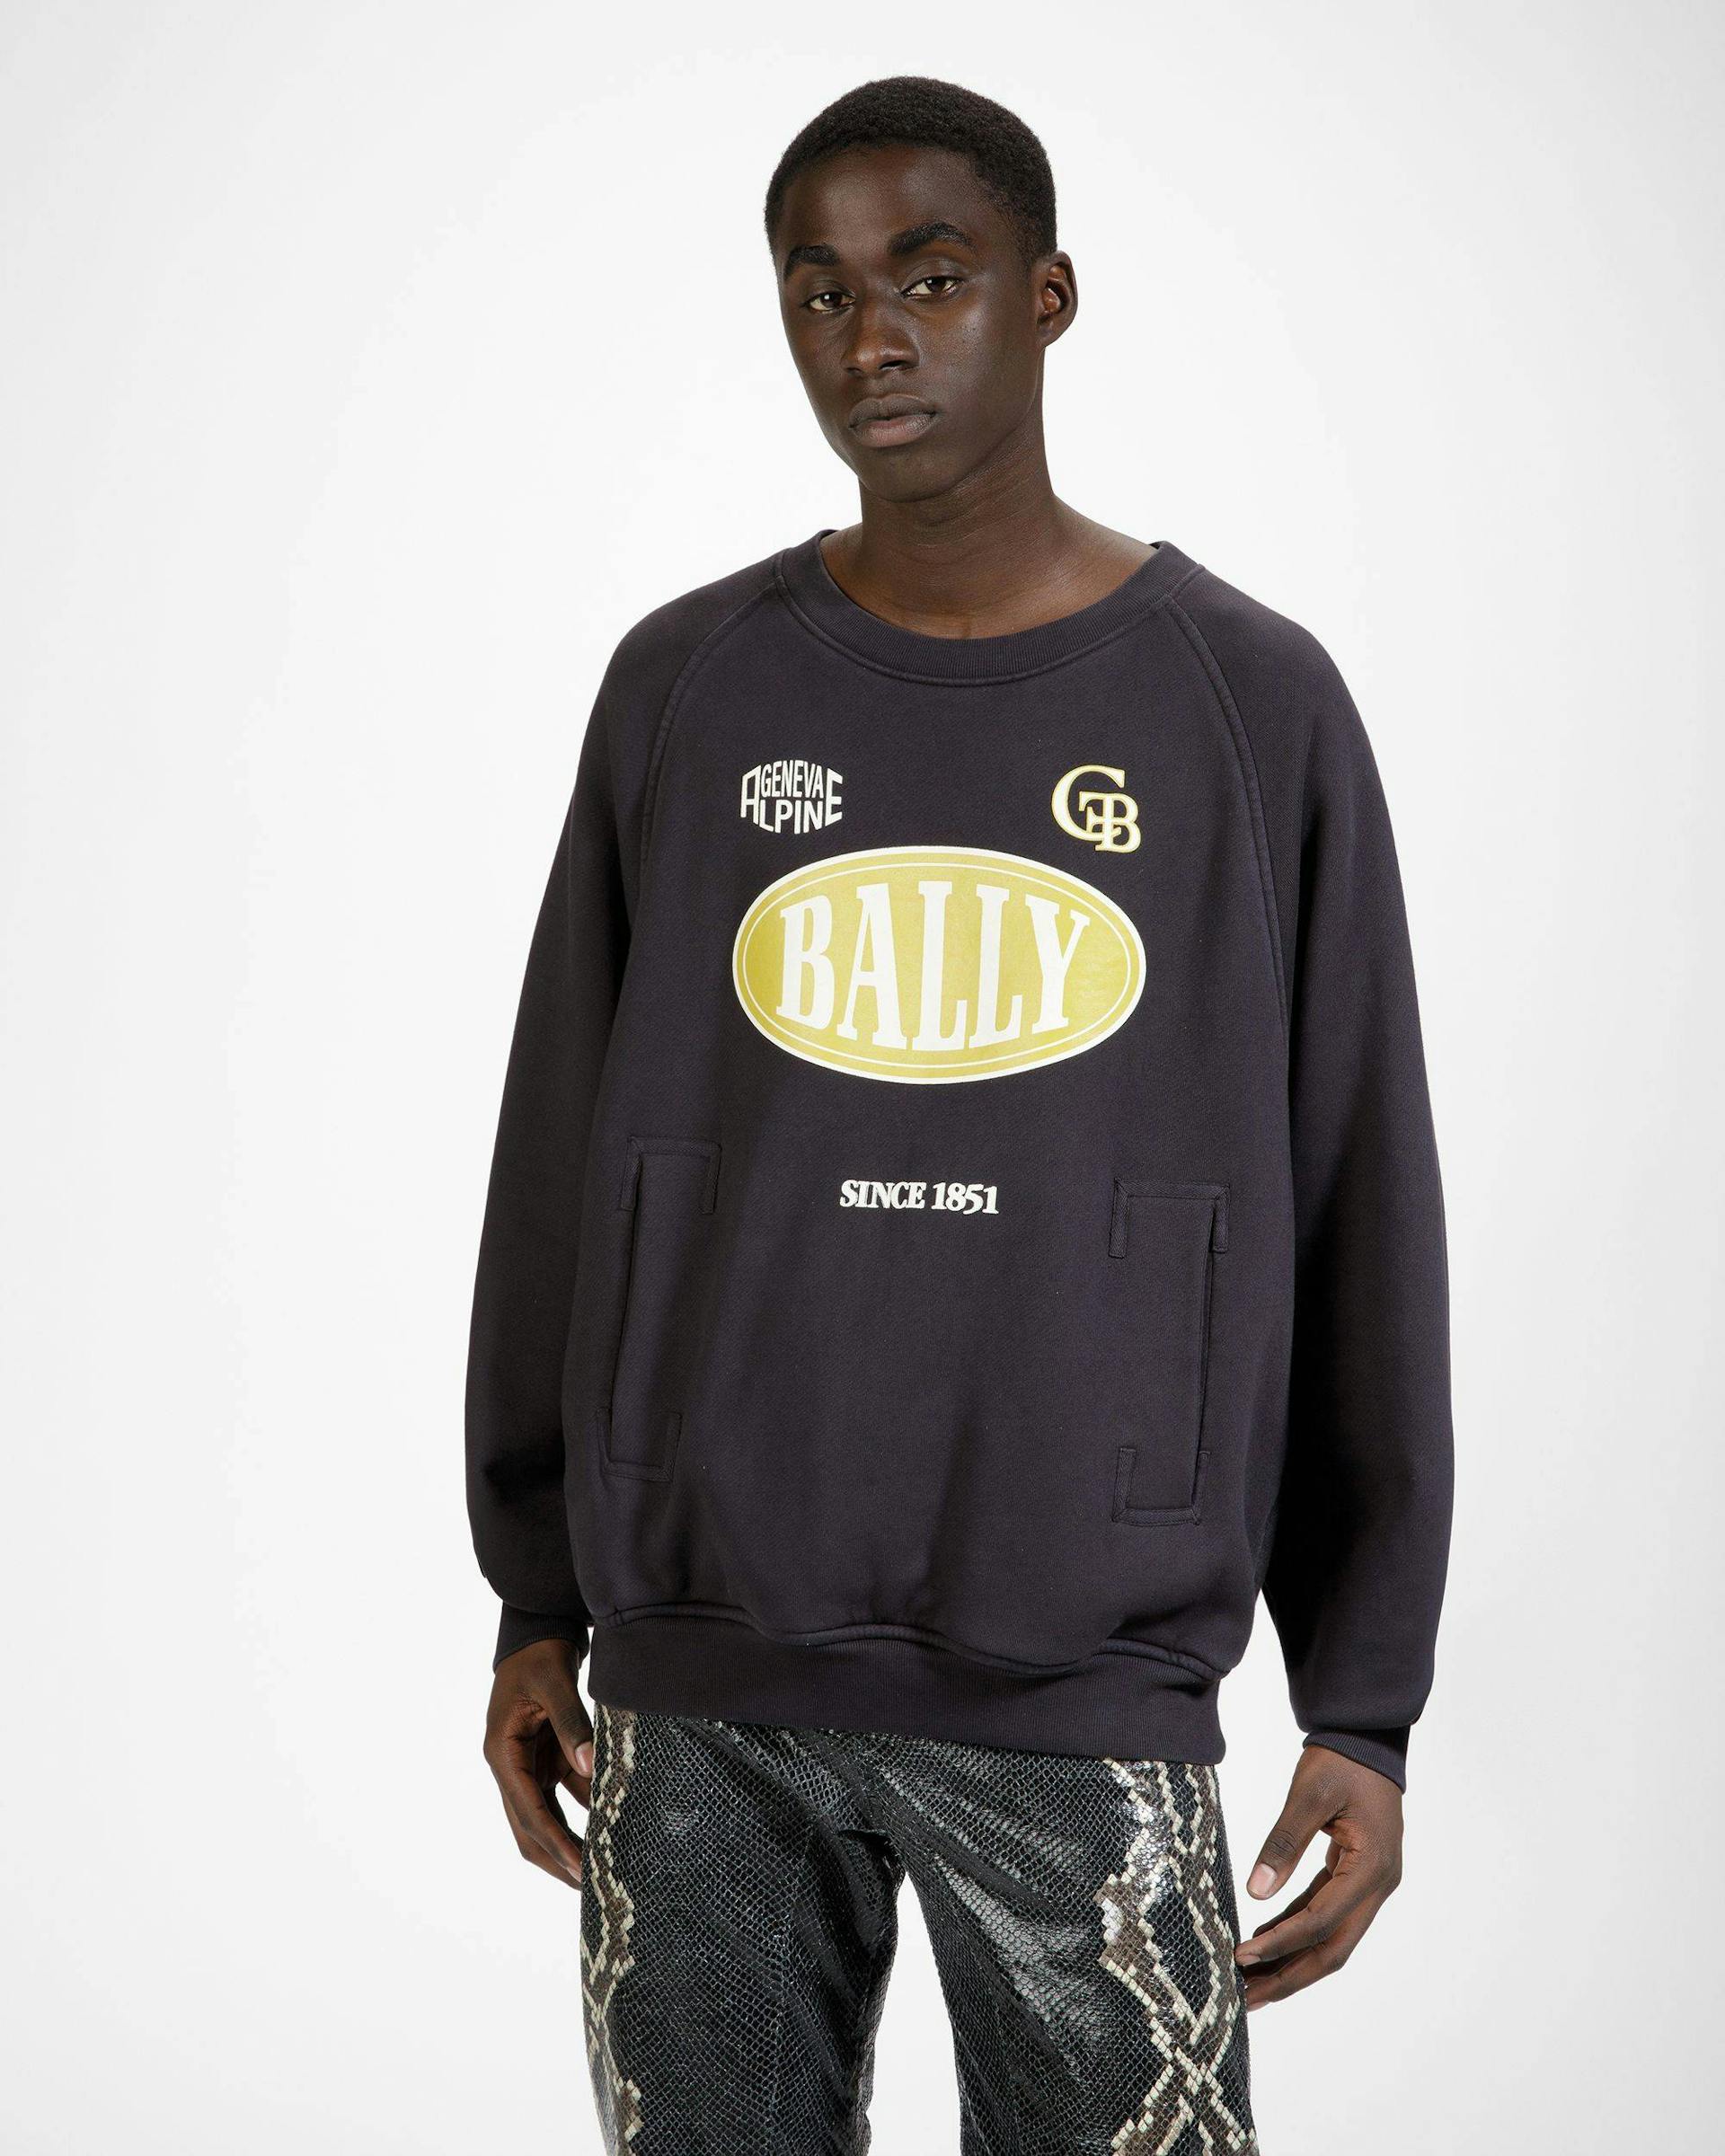 Cotton Printed Crew Neck Sweatshirt In Black - Men's - Bally - 01